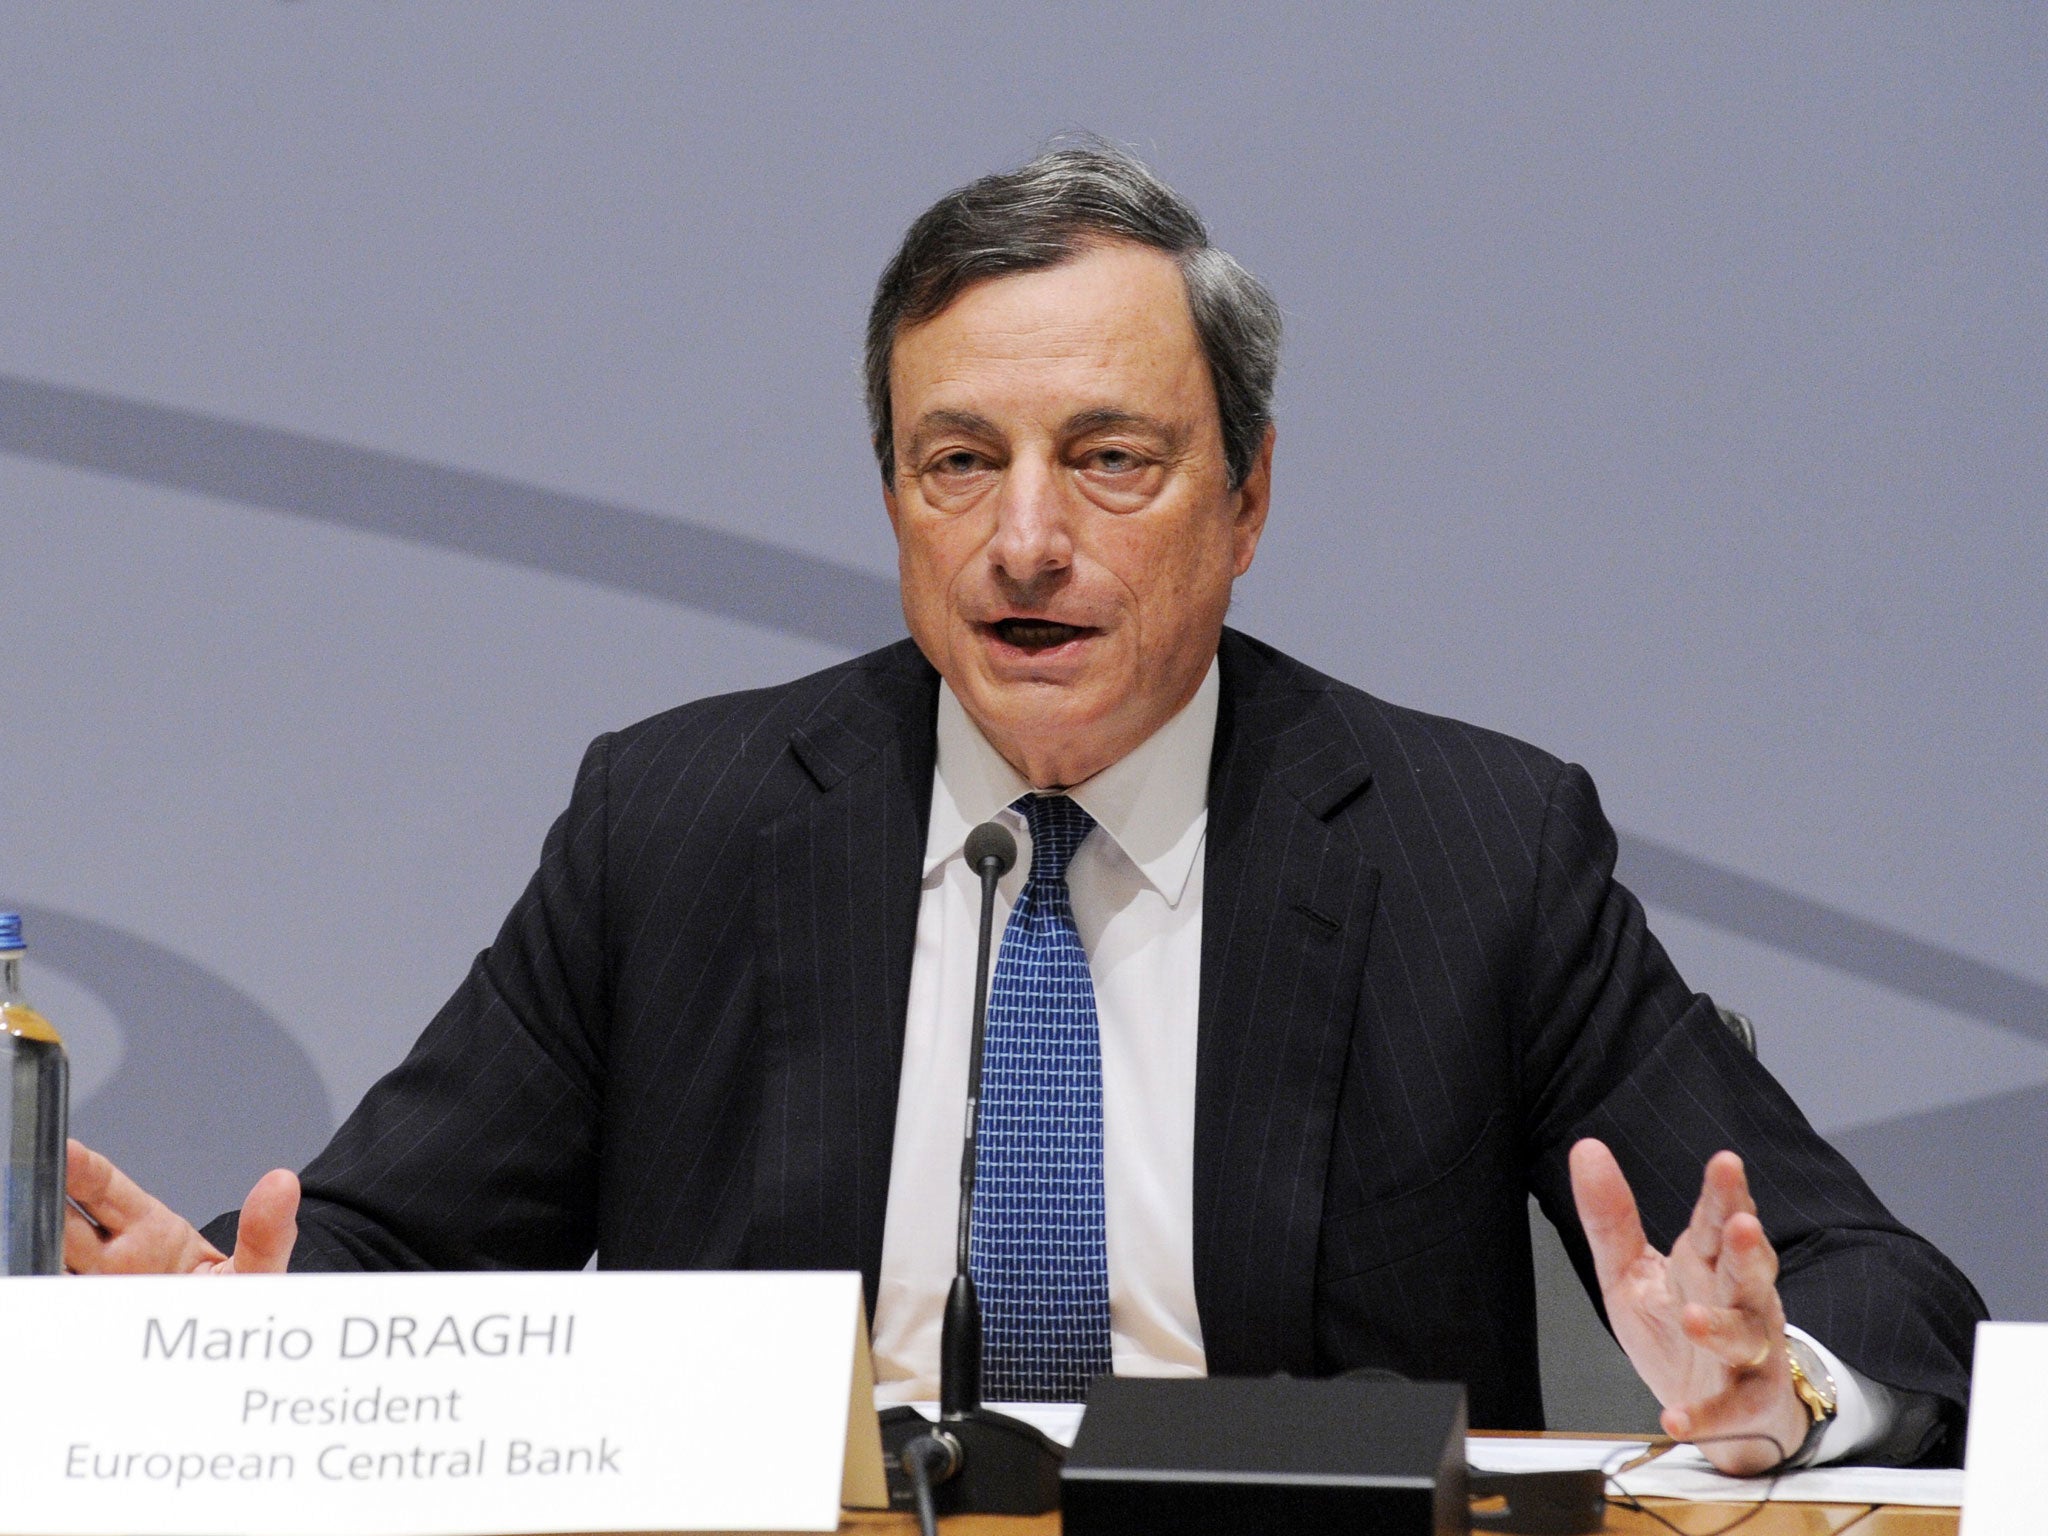 European Central Bank president (ECB) Mario Draghi gives a press conference following ECB's governing council